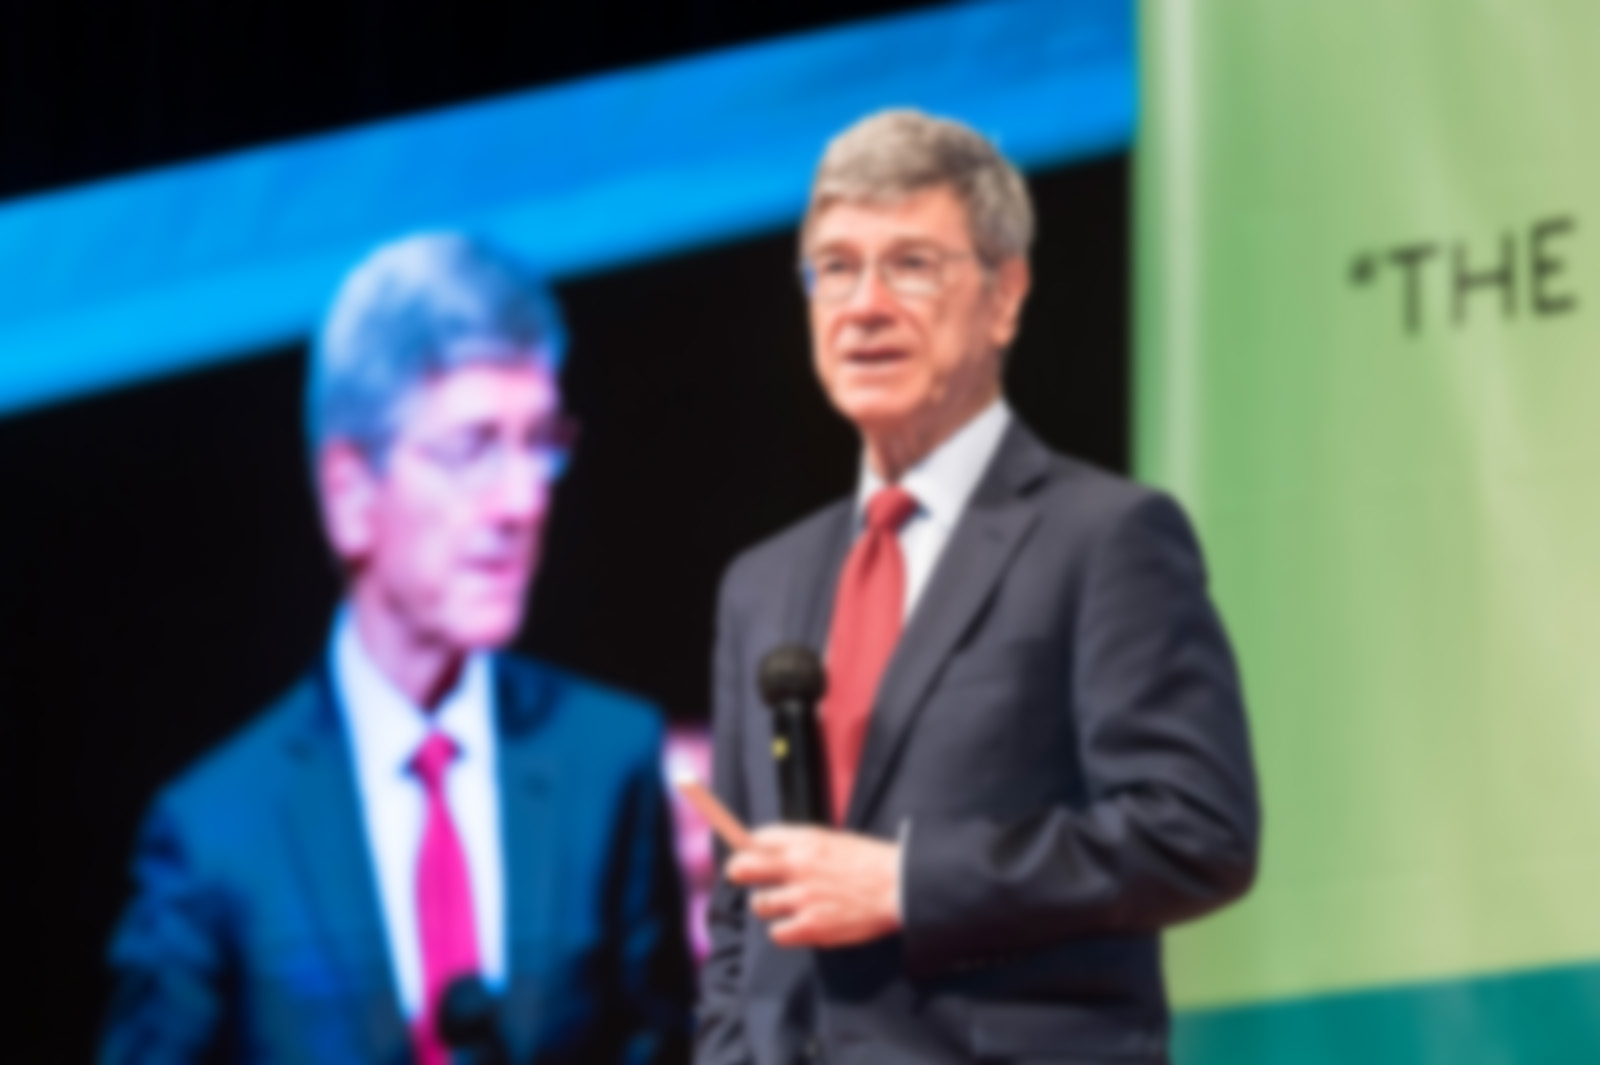 US economist Jeffrey Sachs calls for new politics for sustainability development at CityU talk